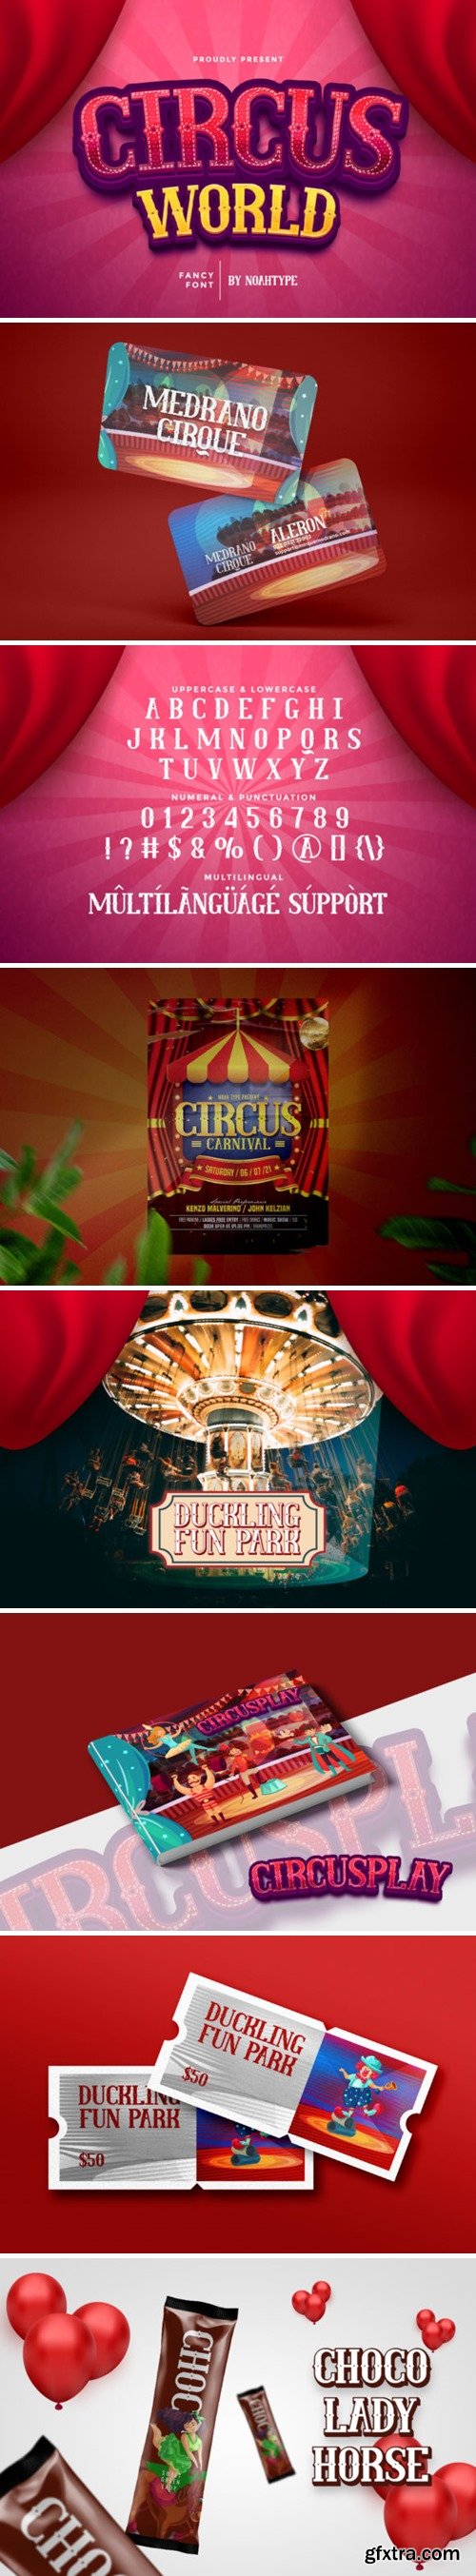 Circus World Font